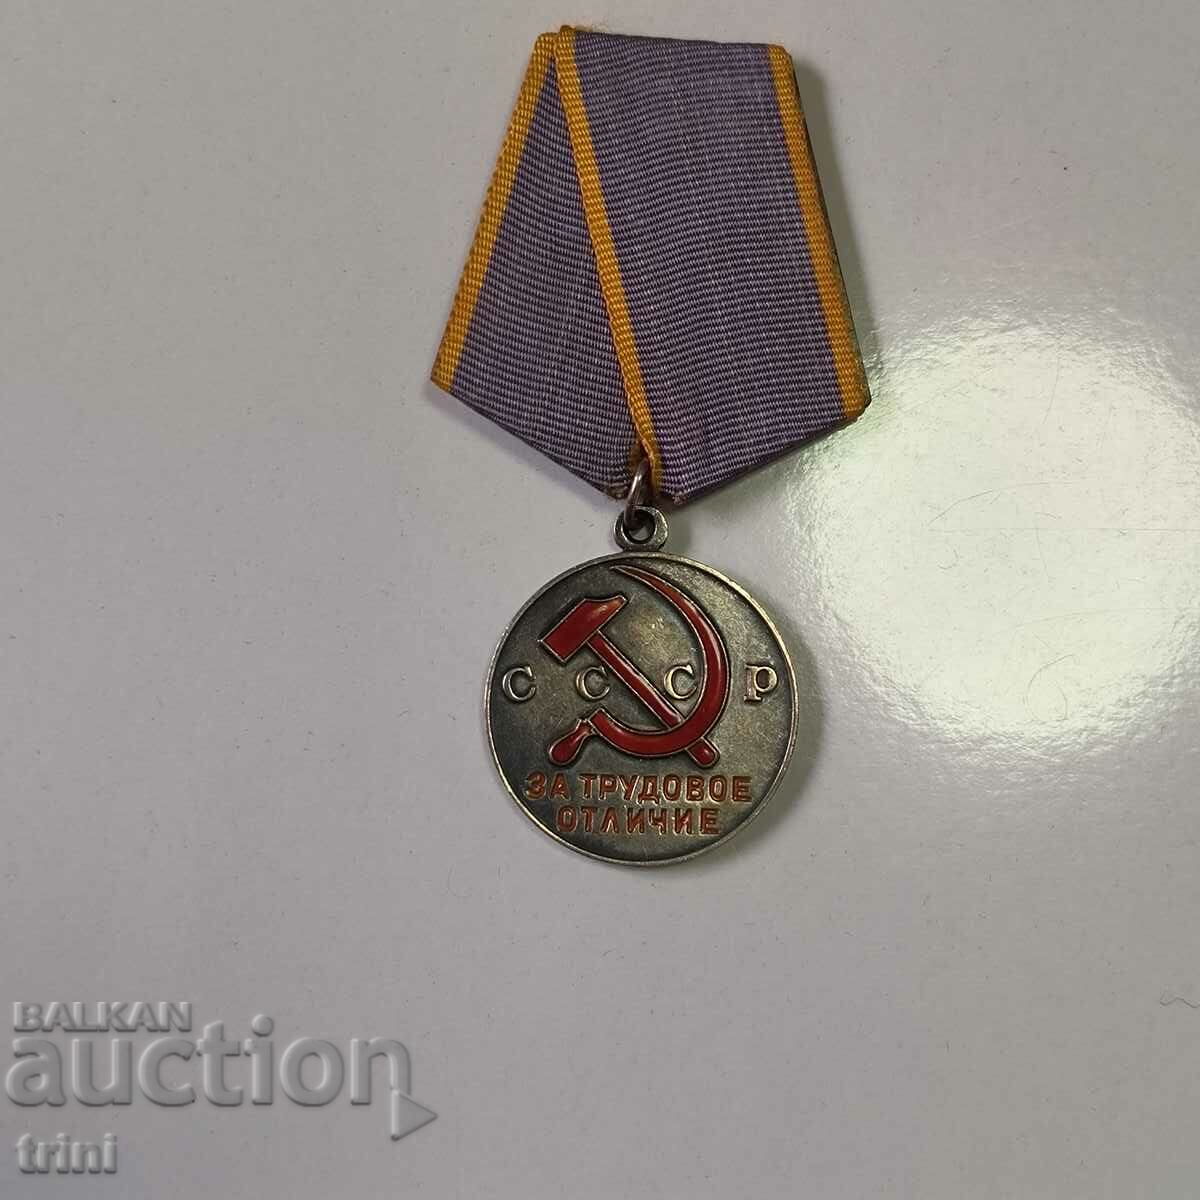 USSR Medal for Labor Distinction, rare